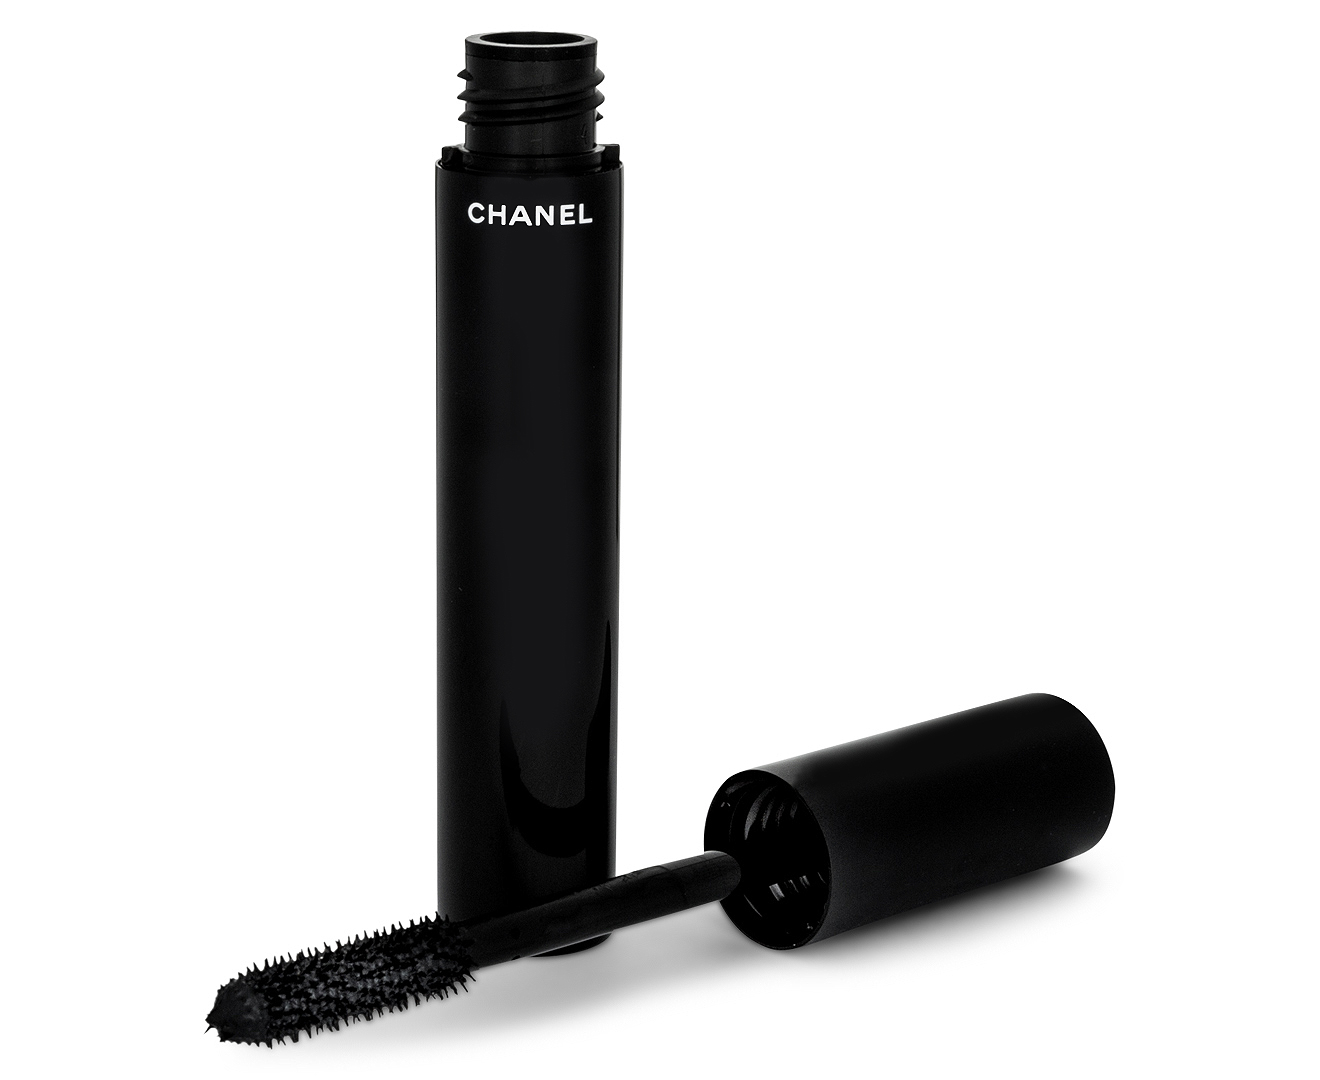 Chanel Inimitable Waterproof Mascara 5g - #10 Noir